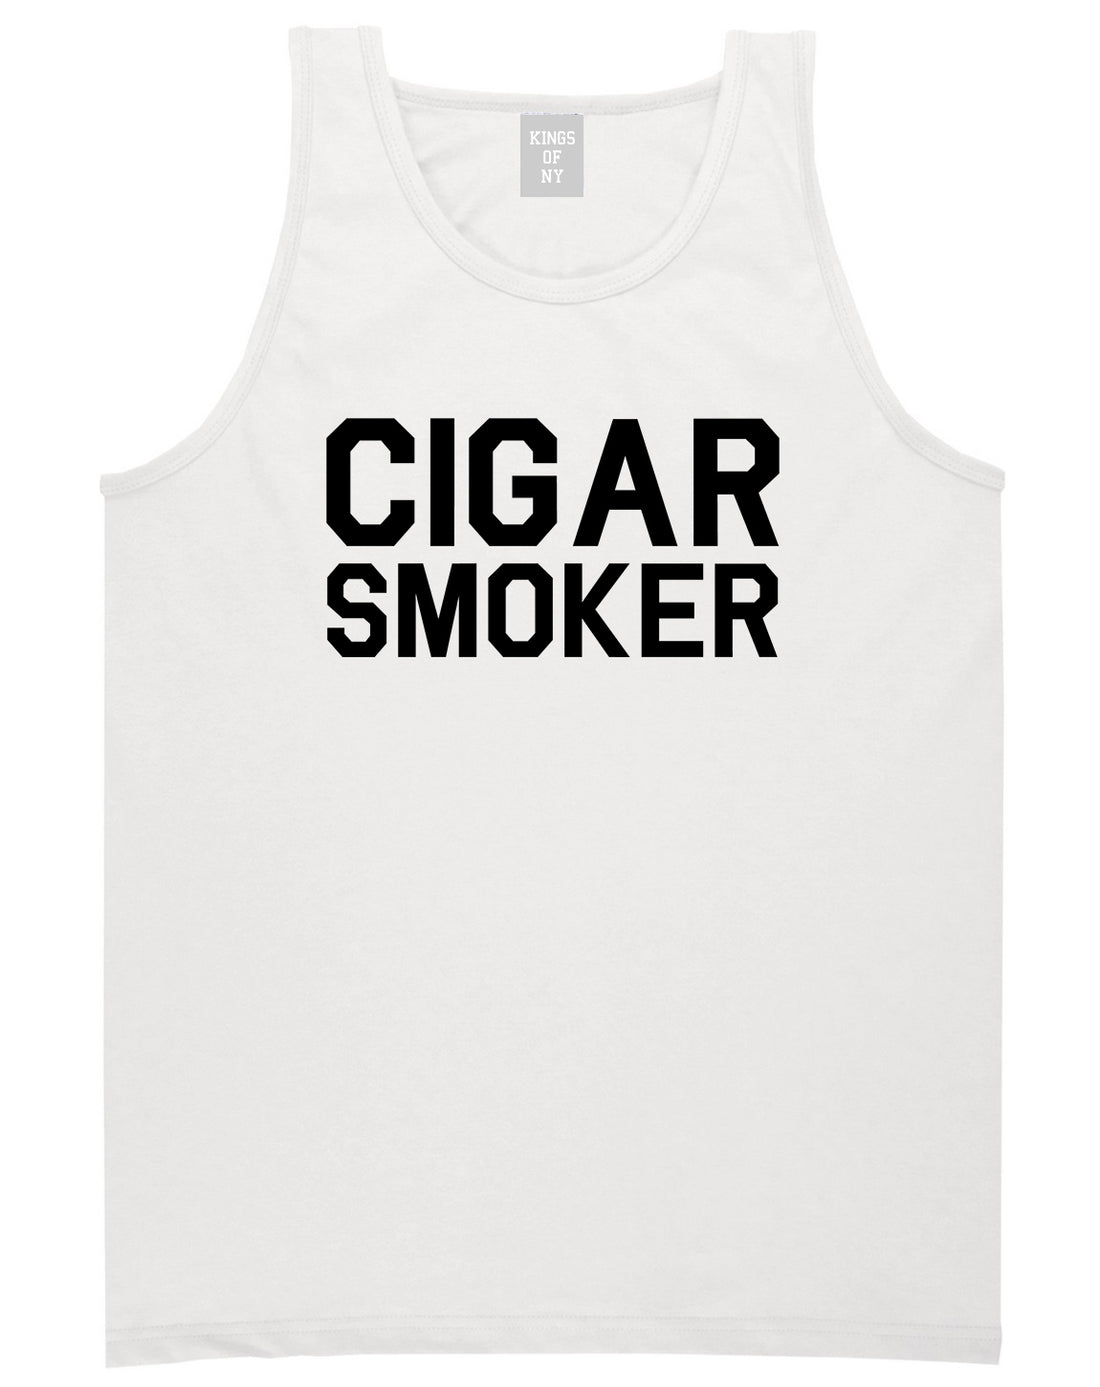 Cigar Smoker White Tank Top Shirt by Kings Of NY